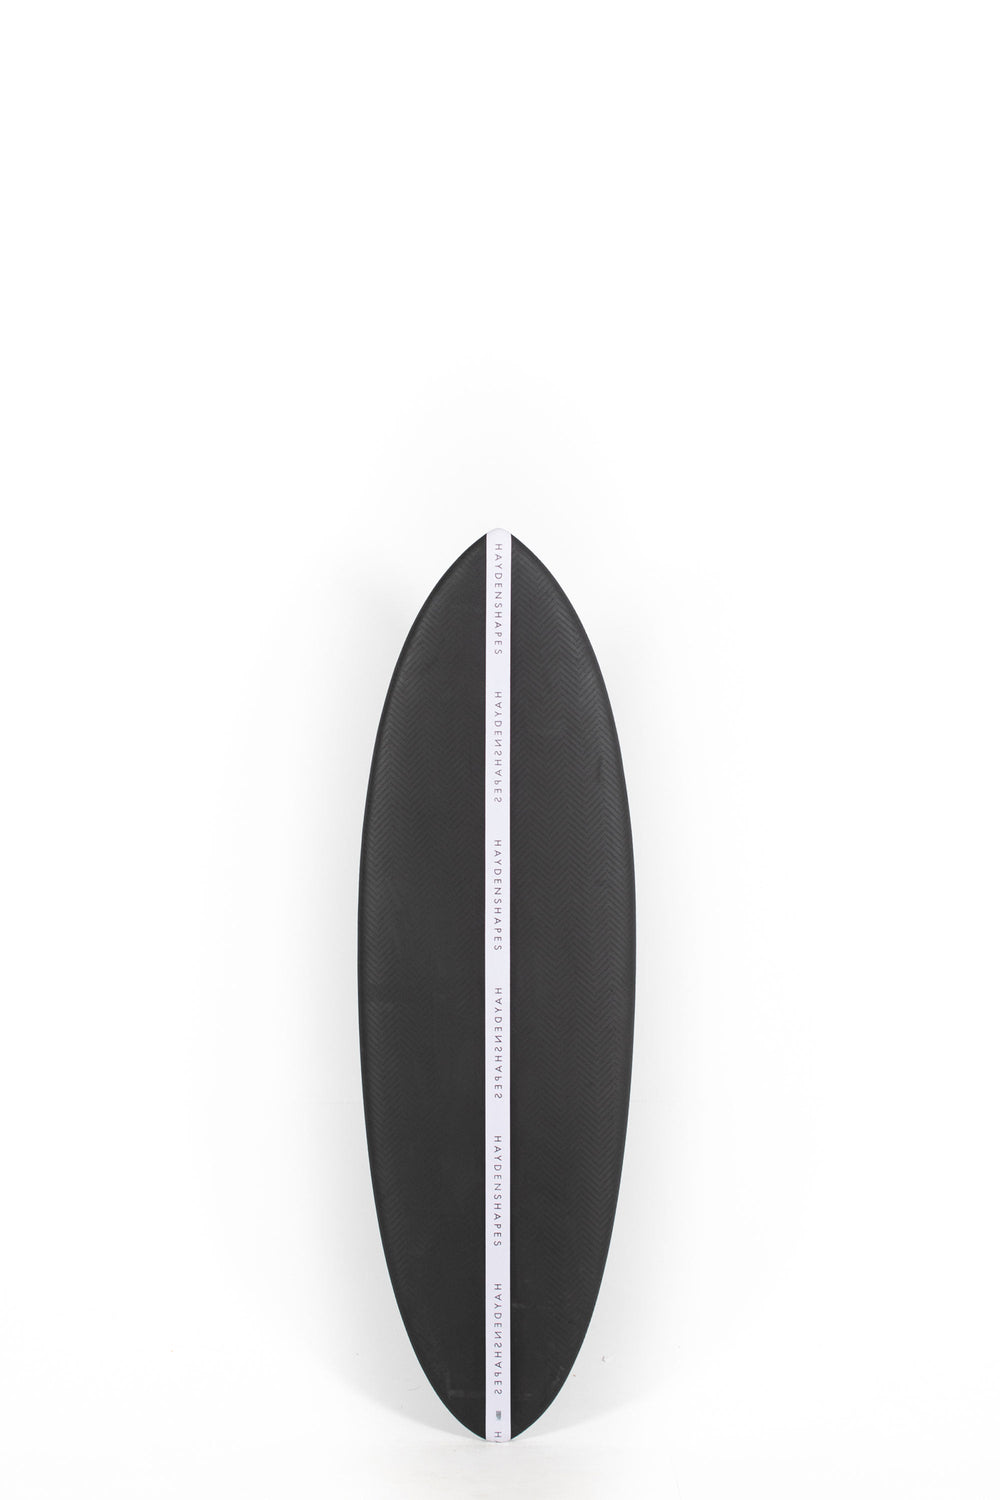 Pukas Surf Shop - HaydenShapes Surfboard - HYPTO KRIPTO SOFT - 5'8